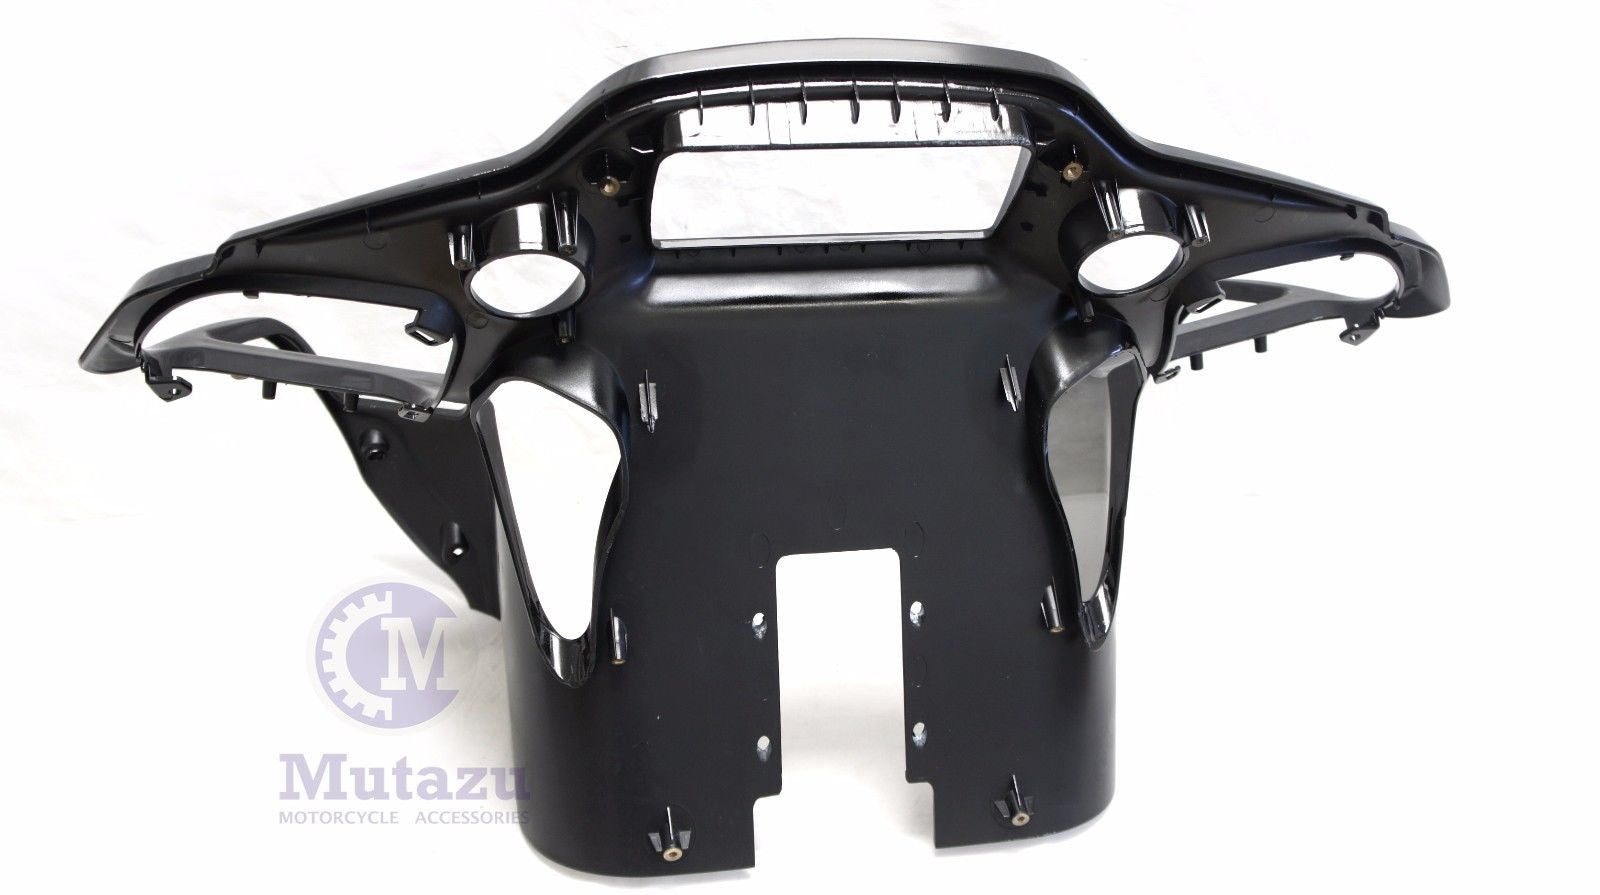 Mutazu Vivid Black Inner ABS Front Fairing for Harley Road Glide